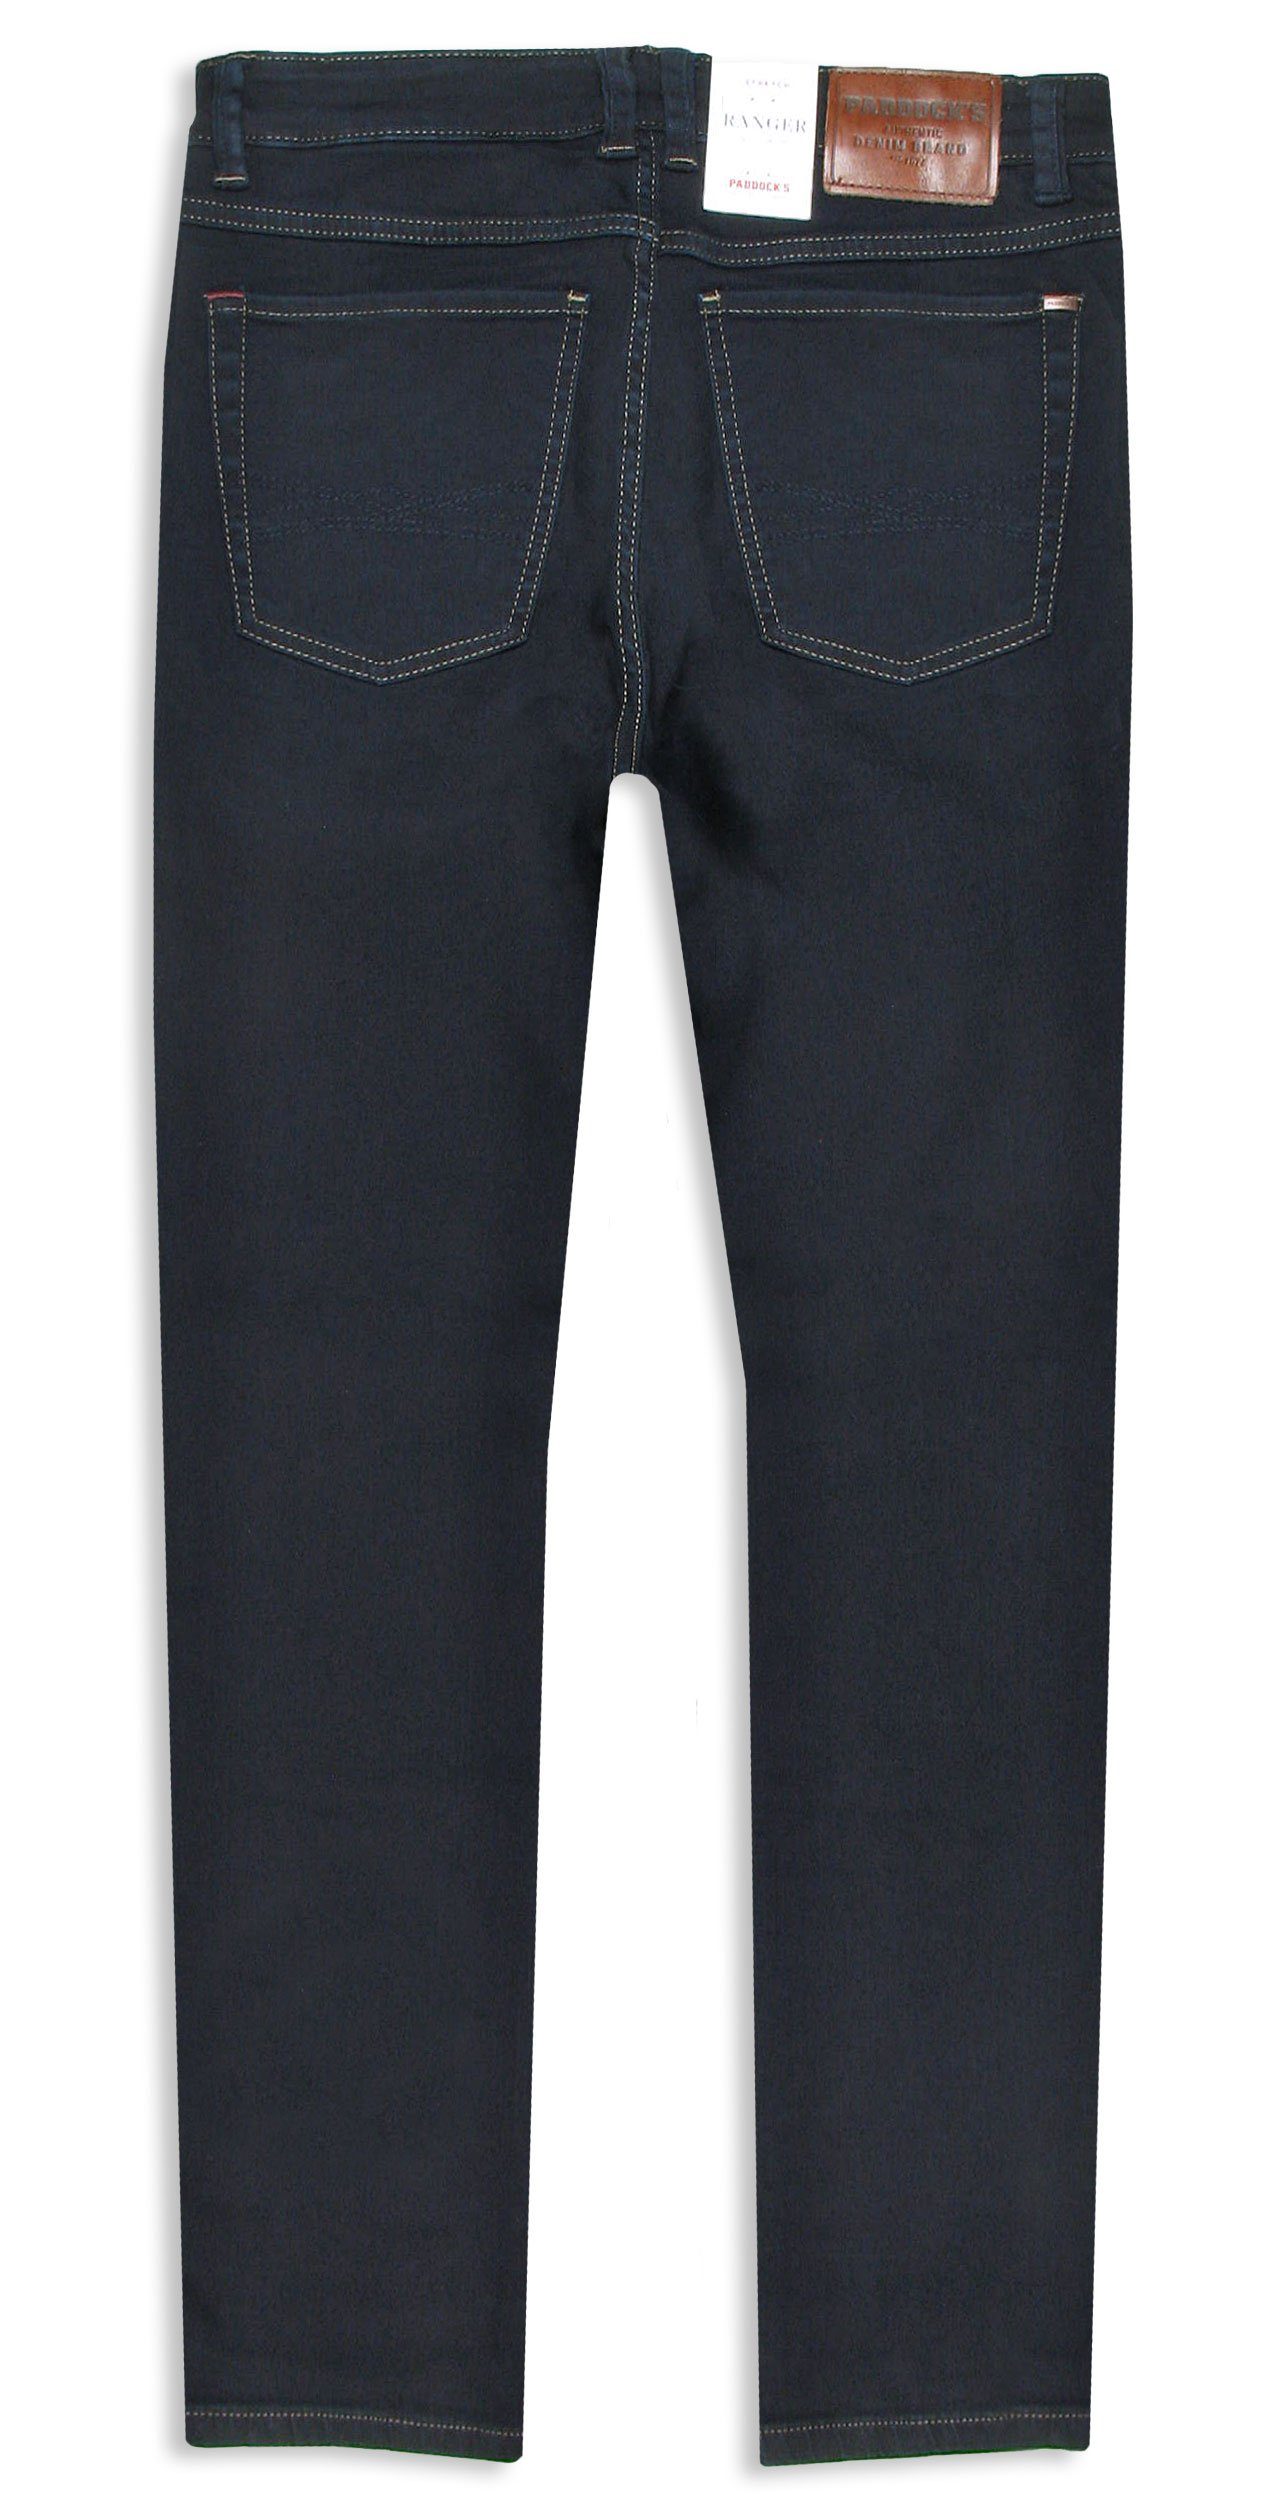 Comfort Stretch black Motion Ranger Paddock's & rinse Denim blue 5-Pocket-Jeans